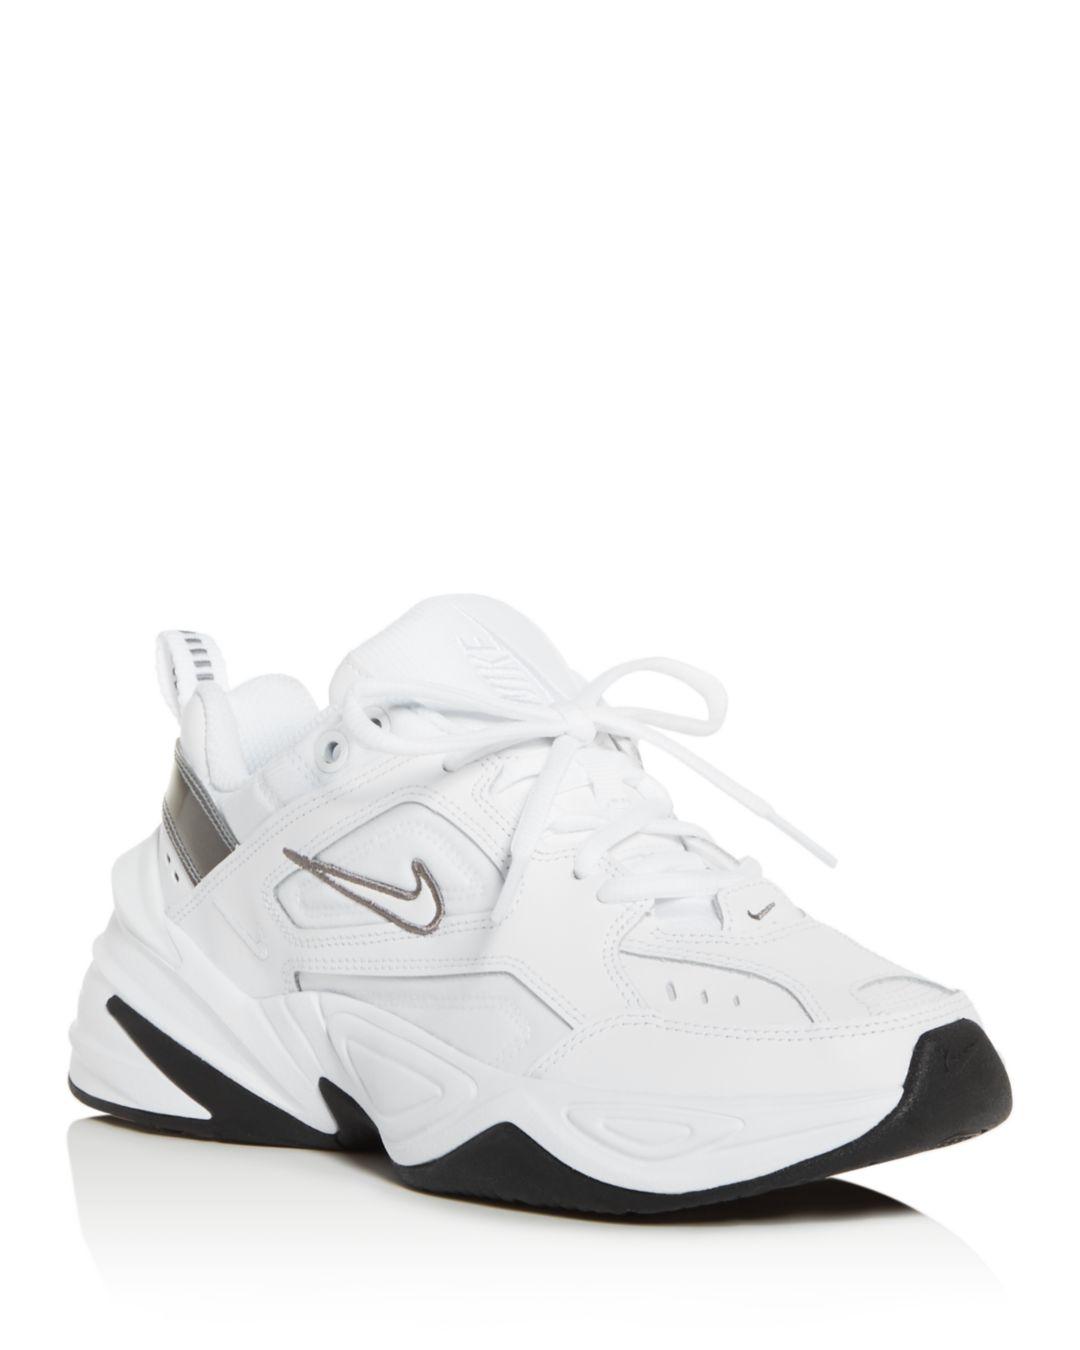 Nike Women's M2k Techno Low - Top Sneakers in White/Cool Gray/Black (White)  - Lyst